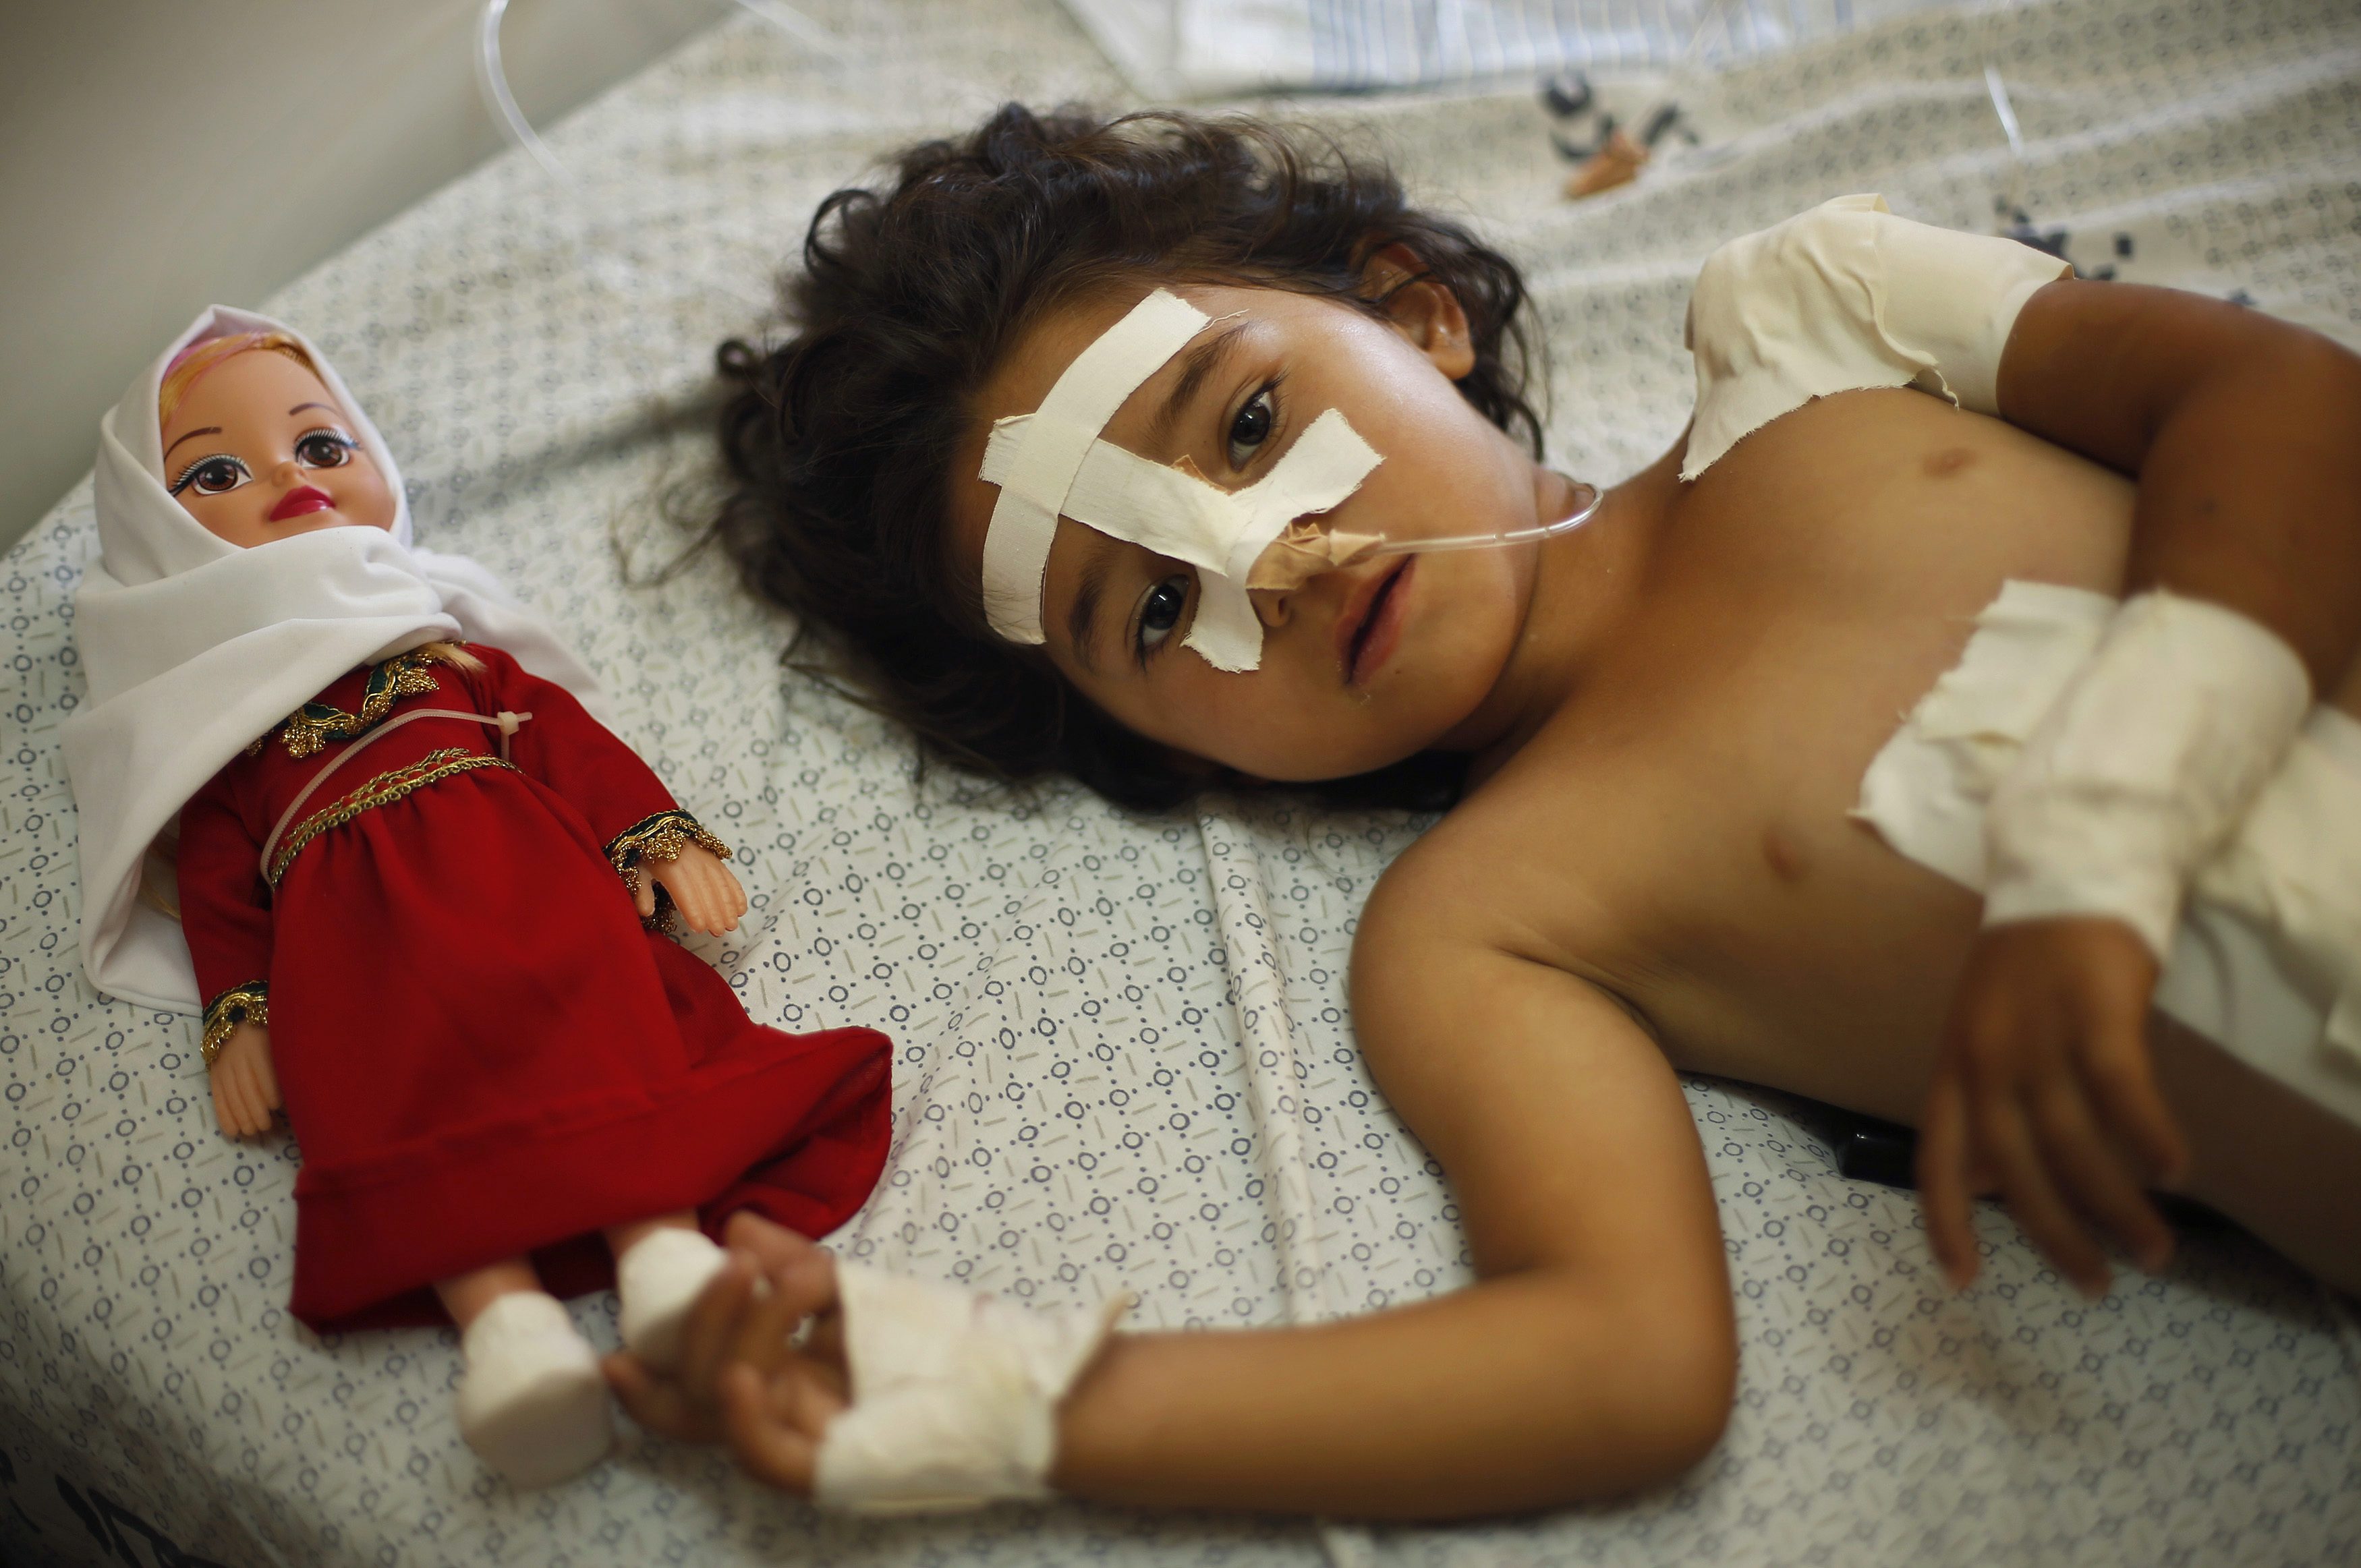 Médecins du Monde strengthens its intervention in the Gaza strip